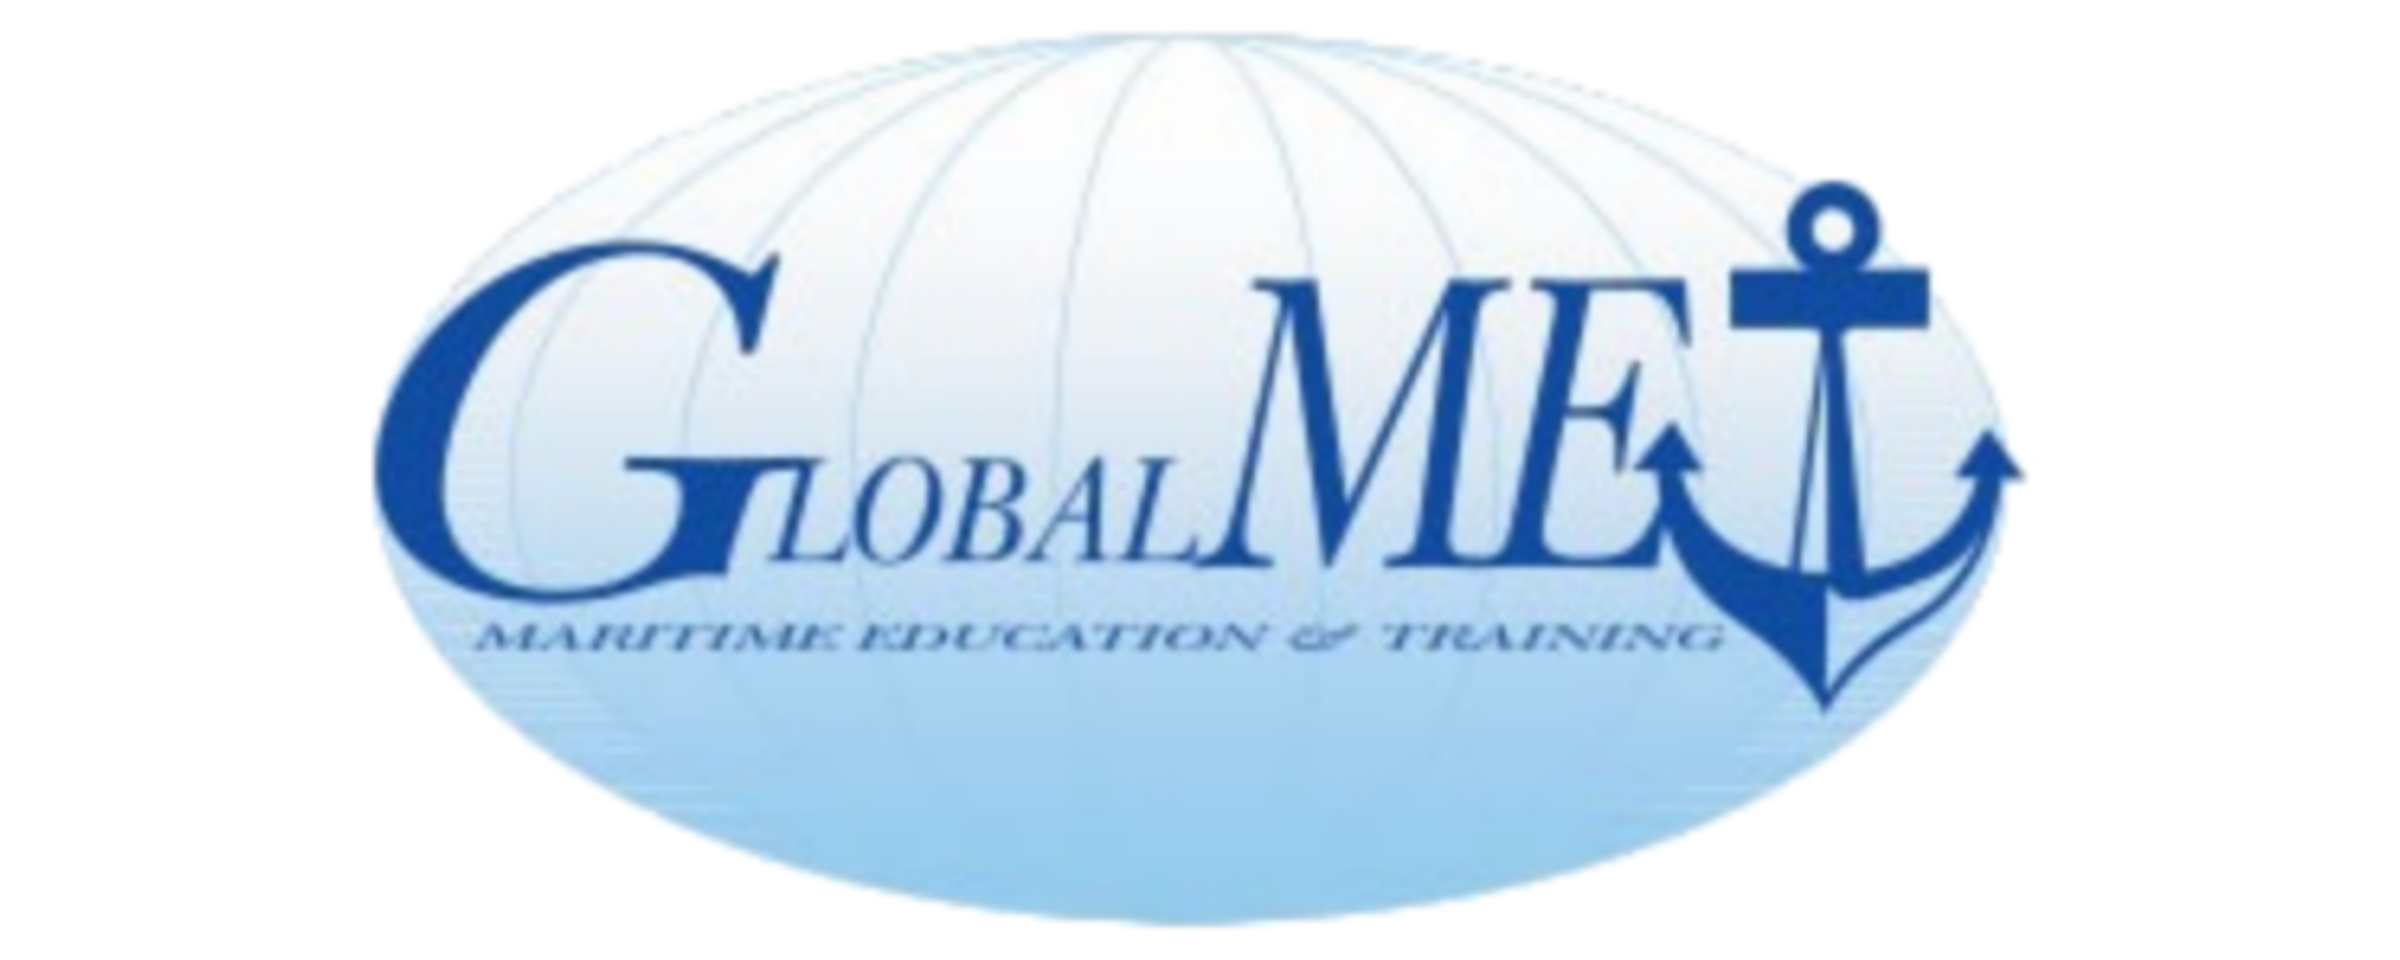 global met MTI Maritime Training Institute affiliation logo karachi pakistan merchant navy courses how to join